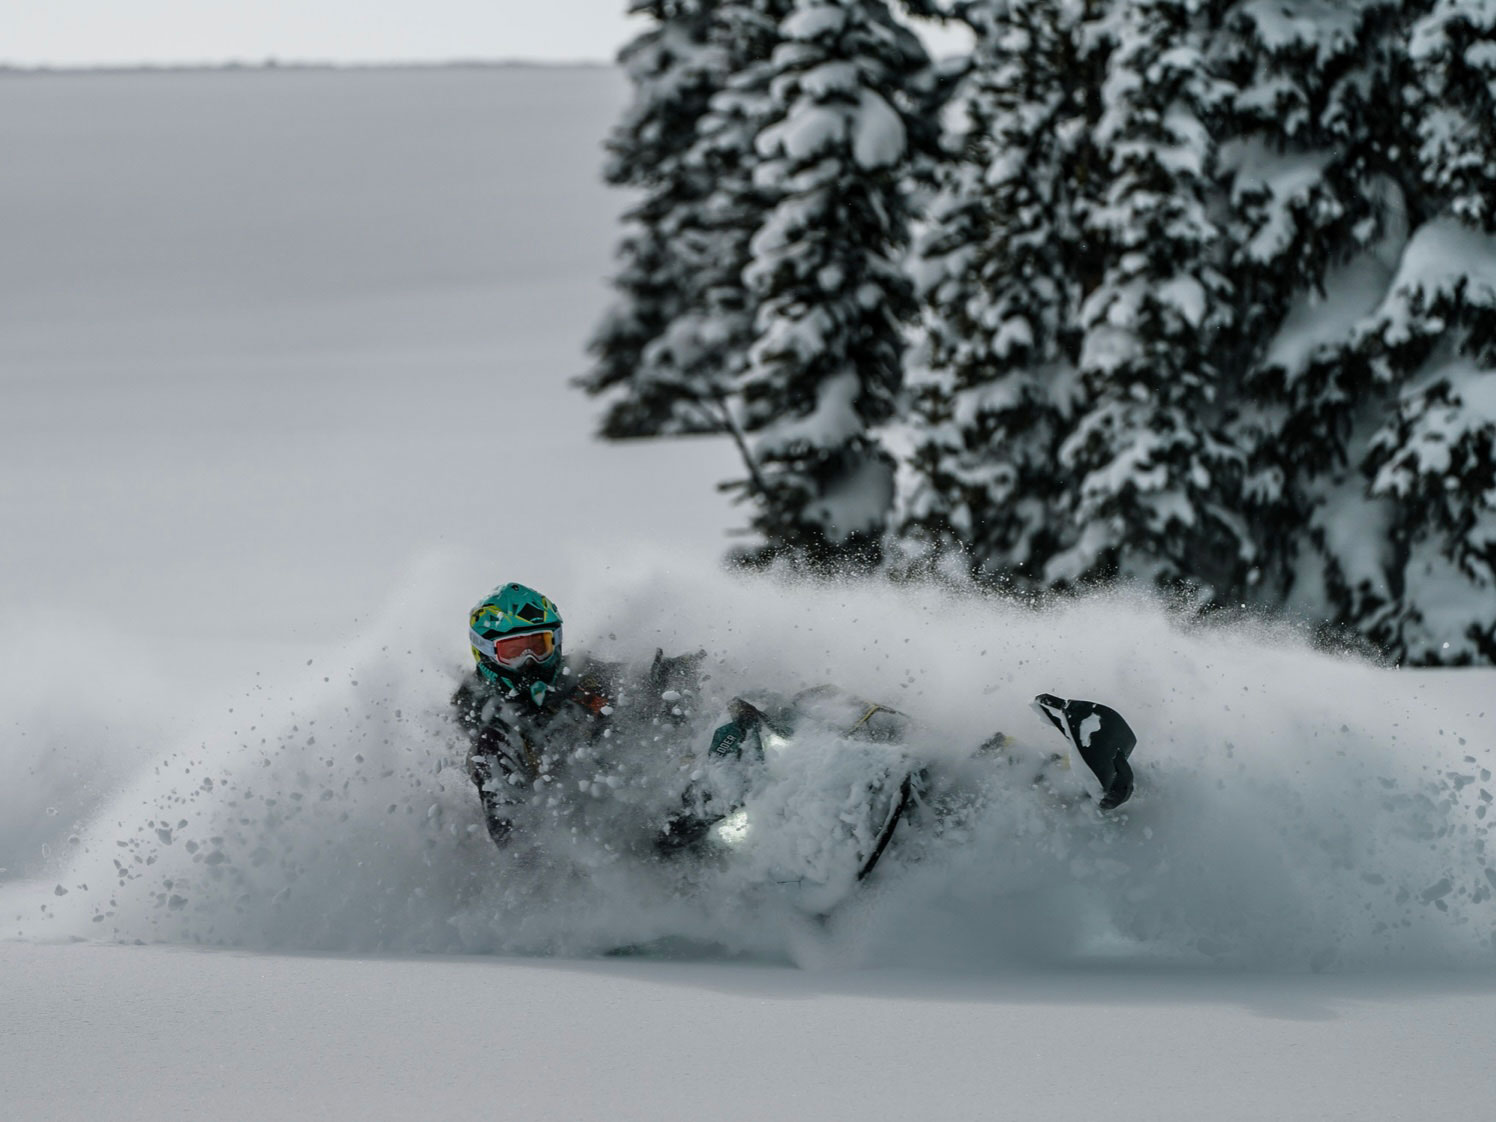 Ski-Doo Ambassador Michelle Salt riding a snowmobile in deep snow